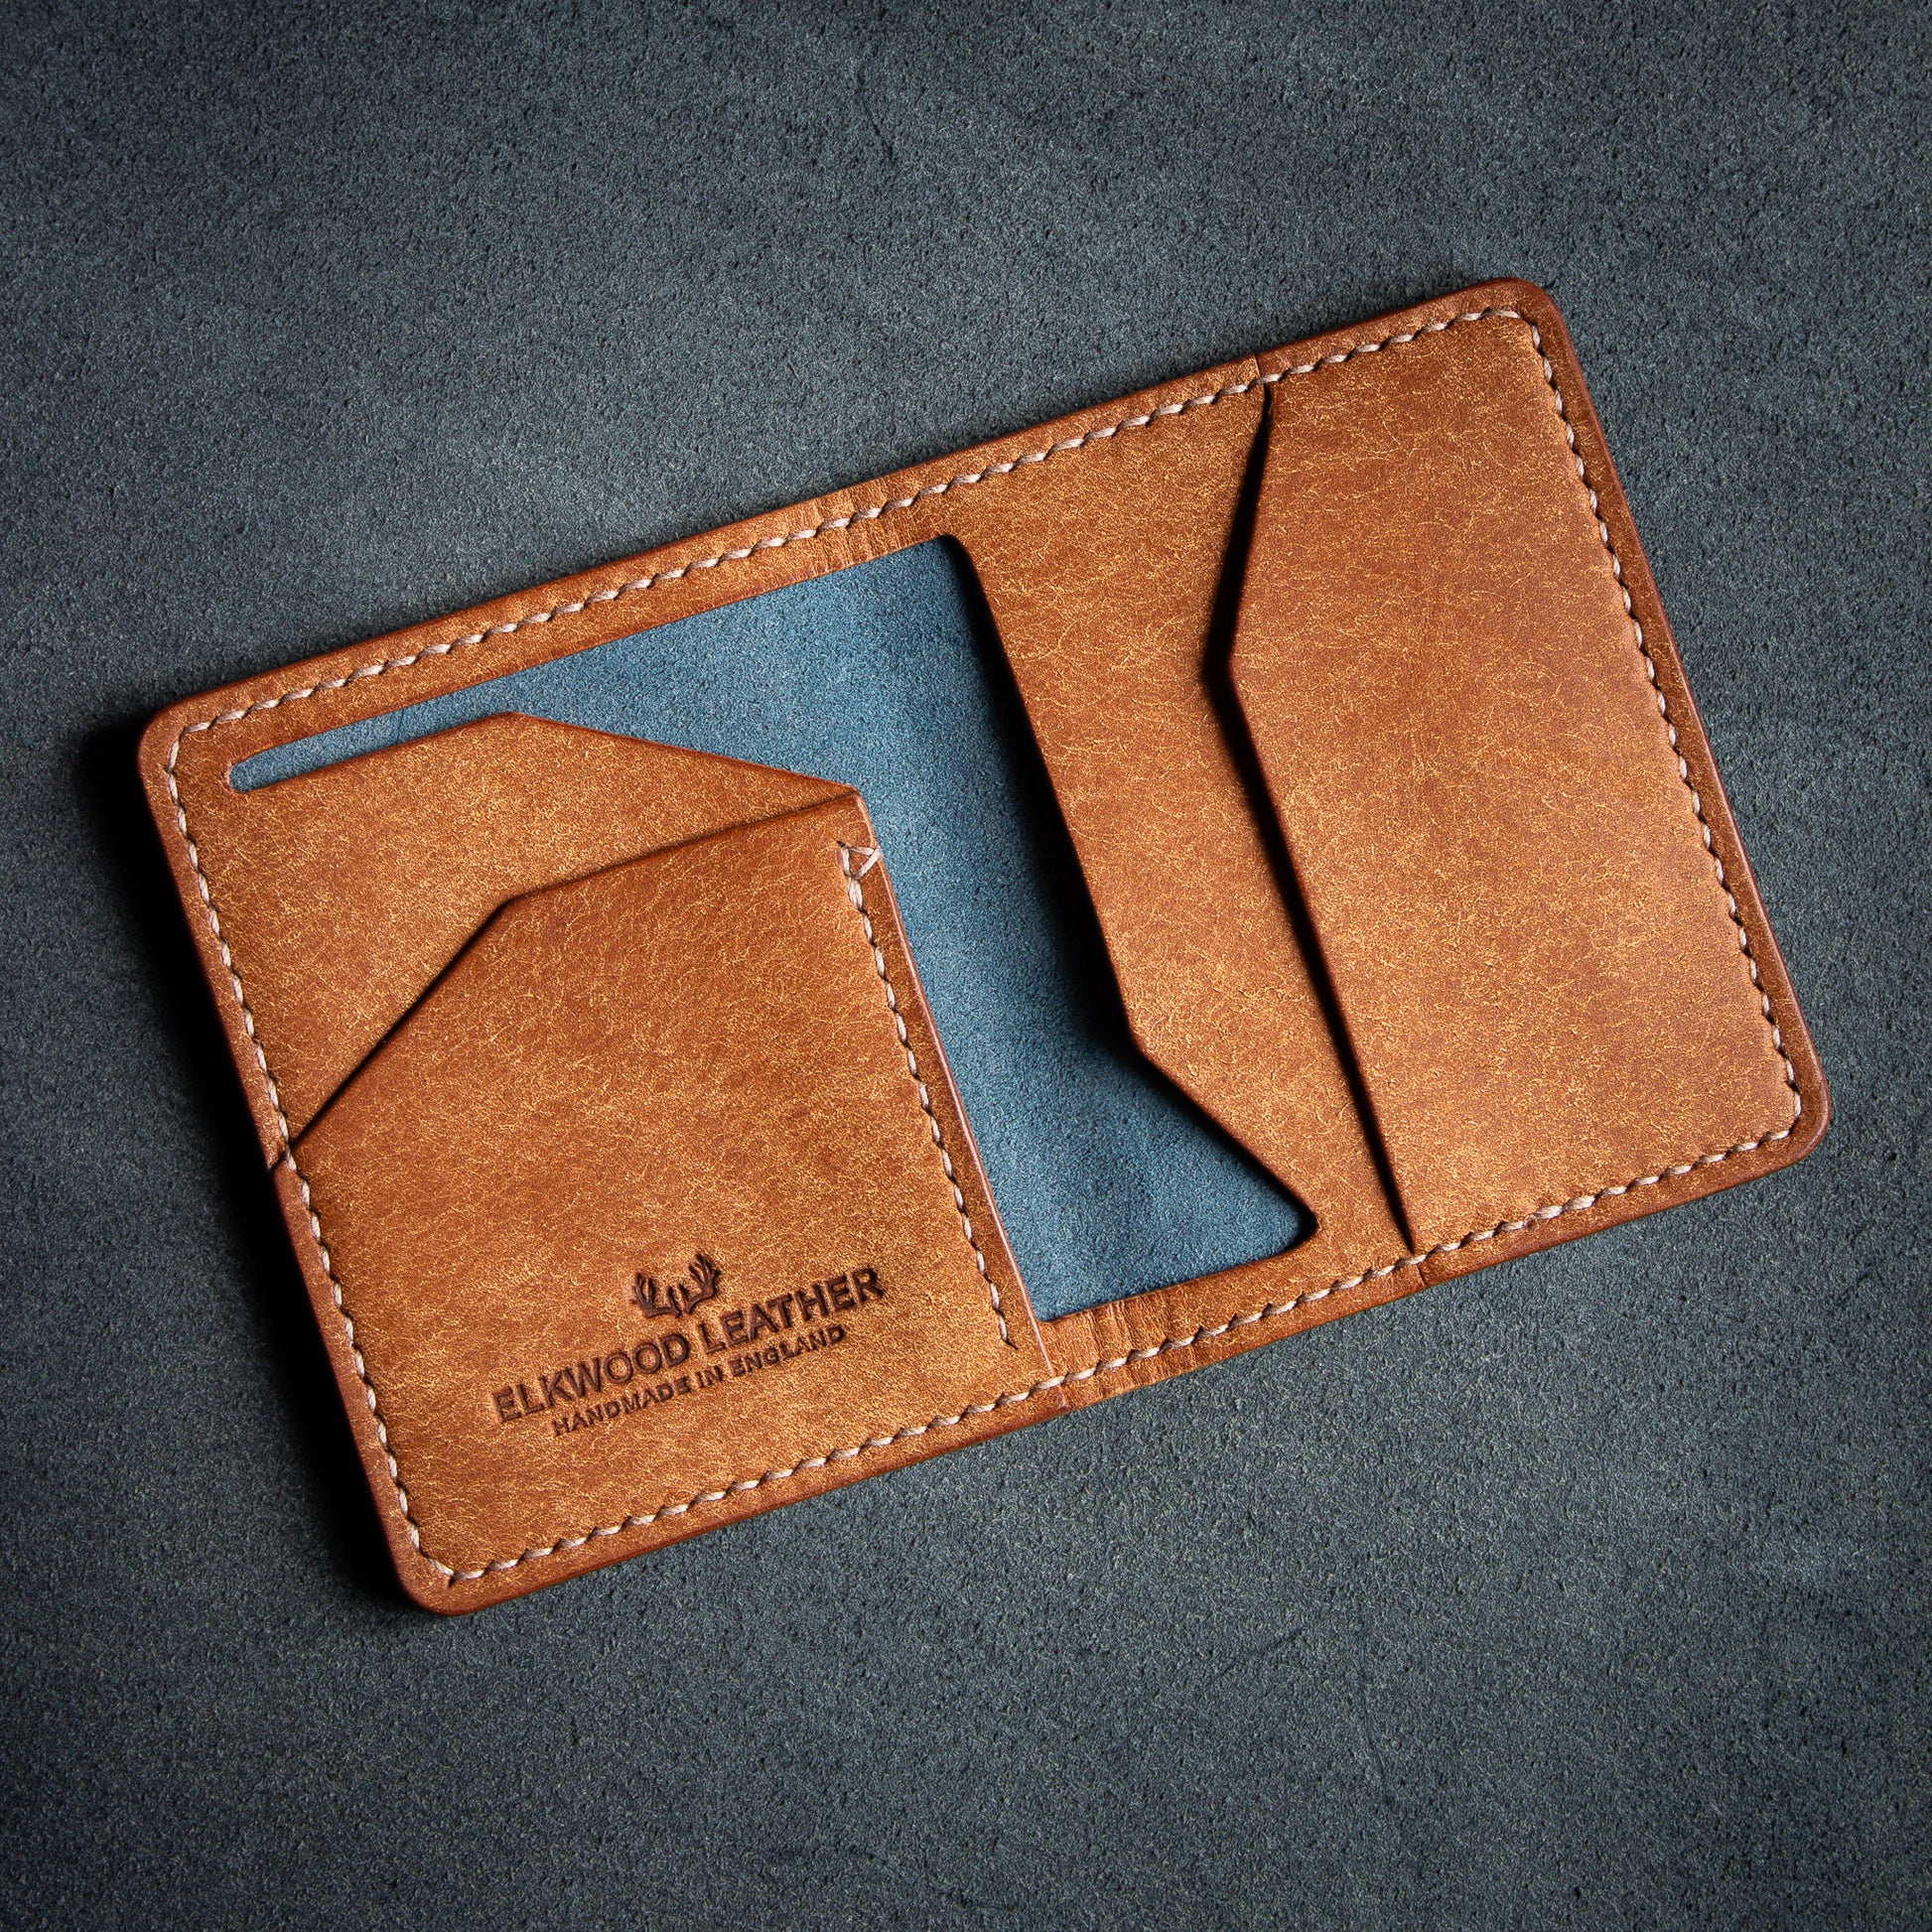 Elkwood Leather the cedar bifold wallet in Navy & Cognac Pueblo leather, on top of flesh side Nero leather hide open pockets